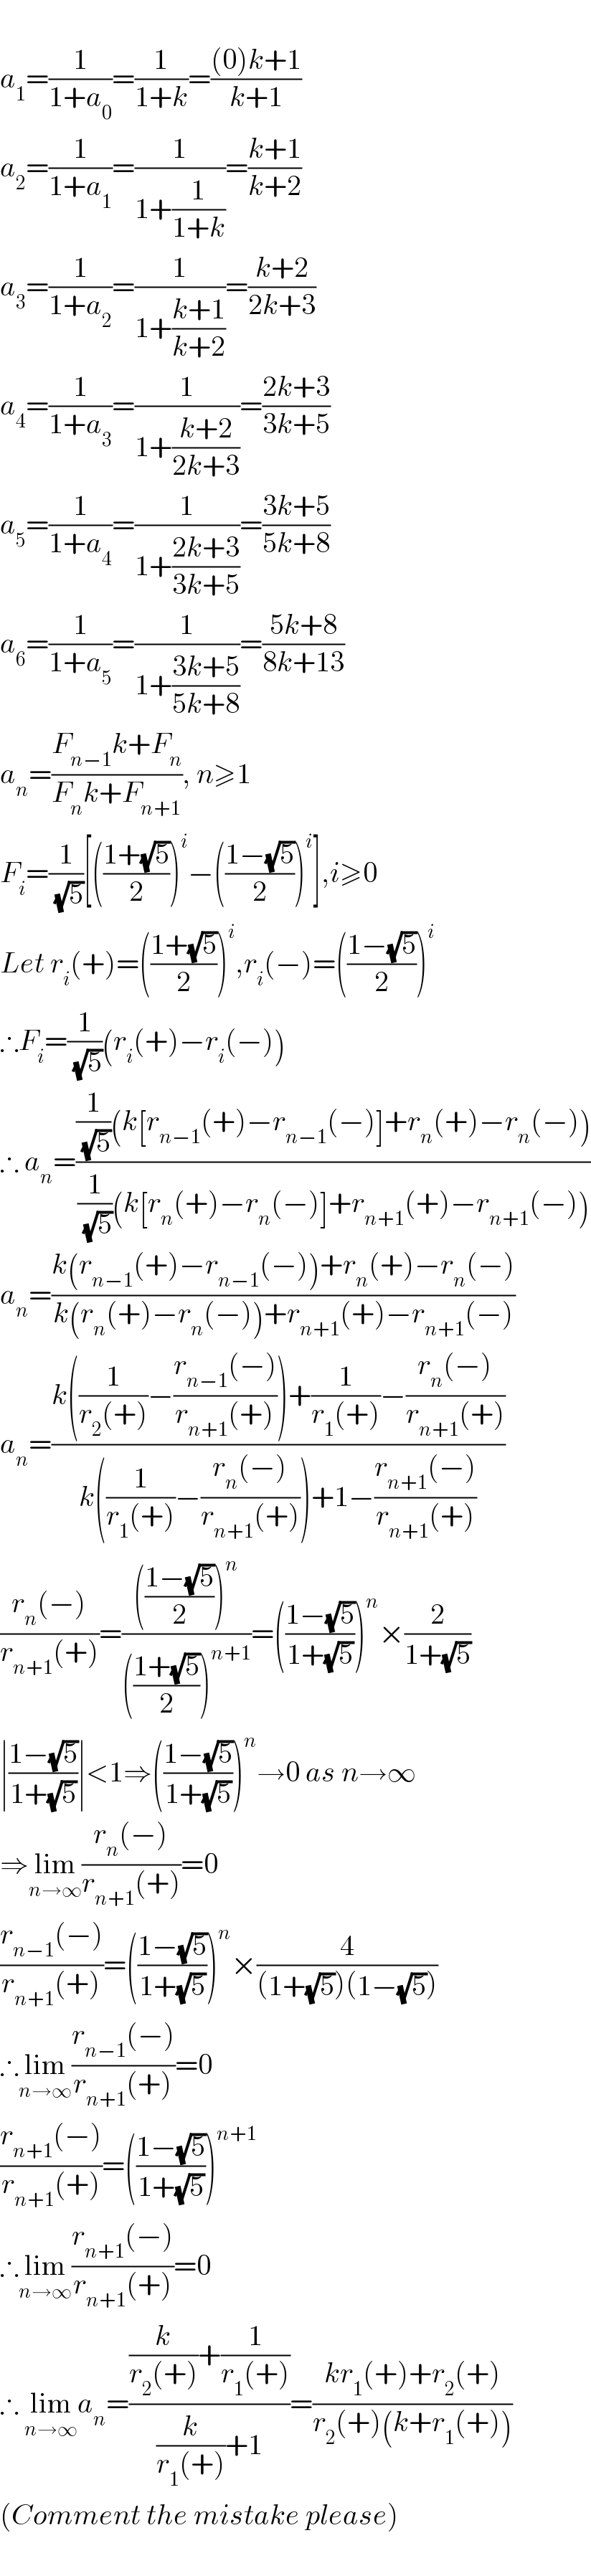   a_1 =(1/(1+a_0 ))=(1/(1+k))=(((0)k+1)/(k+1))  a_2 =(1/(1+a_1 ))=(1/(1+(1/(1+k))))=((k+1)/(k+2))  a_3 =(1/(1+a_2 ))=(1/(1+((k+1)/(k+2))))=((k+2)/(2k+3))  a_4 =(1/(1+a_3 ))=(1/(1+((k+2)/(2k+3))))=((2k+3)/(3k+5))  a_5 =(1/(1+a_4 ))=(1/(1+((2k+3)/(3k+5))))=((3k+5)/(5k+8))  a_6 =(1/(1+a_5 ))=(1/(1+((3k+5)/(5k+8))))=((5k+8)/(8k+13))  a_n =((F_(n−1) k+F_n )/(F_n k+F_(n+1) )), n≥1  F_i =(1/(√5))[(((1+(√5))/2))^i −(((1−(√5))/2))^i ],i≥0  Let r_i (+)=(((1+(√5))/2))^i ,r_i (−)=(((1−(√5))/2))^i   ∴F_i =(1/(√5))(r_i (+)−r_i (−))  ∴ a_n =(((1/(√5))(k[r_(n−1) (+)−r_(n−1) (−)]+r_n (+)−r_n (−)))/((1/(√5))(k[r_n (+)−r_n (−)]+r_(n+1) (+)−r_(n+1) (−))))  a_n =((k(r_(n−1) (+)−r_(n−1) (−))+r_n (+)−r_n (−))/(k(r_n (+)−r_n (−))+r_(n+1) (+)−r_(n+1) (−)))  a_n =((k((1/(r_2 (+)))−((r_(n−1) (−))/(r_(n+1) (+))))+(1/(r_1 (+)))−((r_n (−))/(r_(n+1) (+))))/(k((1/(r_1 (+)))−((r_n (−))/(r_(n+1) (+))))+1−((r_(n+1) (−))/(r_(n+1) (+)))))  ((r_n (−))/(r_(n+1) (+)))=(((((1−(√5))/2))^n )/((((1+(√5))/2))^(n+1) ))=(((1−(√5))/(1+(√5))))^n ×(2/(1+(√5)))  ∣((1−(√5))/(1+(√5)))∣<1⇒(((1−(√5))/(1+(√5))))^n →0 as n→∞  ⇒lim_(n→∞) ((r_n (−))/(r_(n+1) (+)))=0  ((r_(n−1) (−))/(r_(n+1) (+)))=(((1−(√5))/(1+(√5))))^n ×(4/((1+(√5))(1−(√5))))  ∴lim_(n→∞) ((r_(n−1) (−))/(r_(n+1) (+)))=0  ((r_(n+1) (−))/(r_(n+1) (+)))=(((1−(√5))/(1+(√5))))^(n+1)   ∴lim_(n→∞) ((r_(n+1) (−))/(r_(n+1) (+)))=0  ∴ lim_(n→∞) a_n =(((k/(r_2 (+)))+(1/(r_1 (+))))/((k/(r_1 (+)))+1))=((kr_1 (+)+r_2 (+))/(r_2 (+)(k+r_1 (+))))  (Comment the mistake please)    